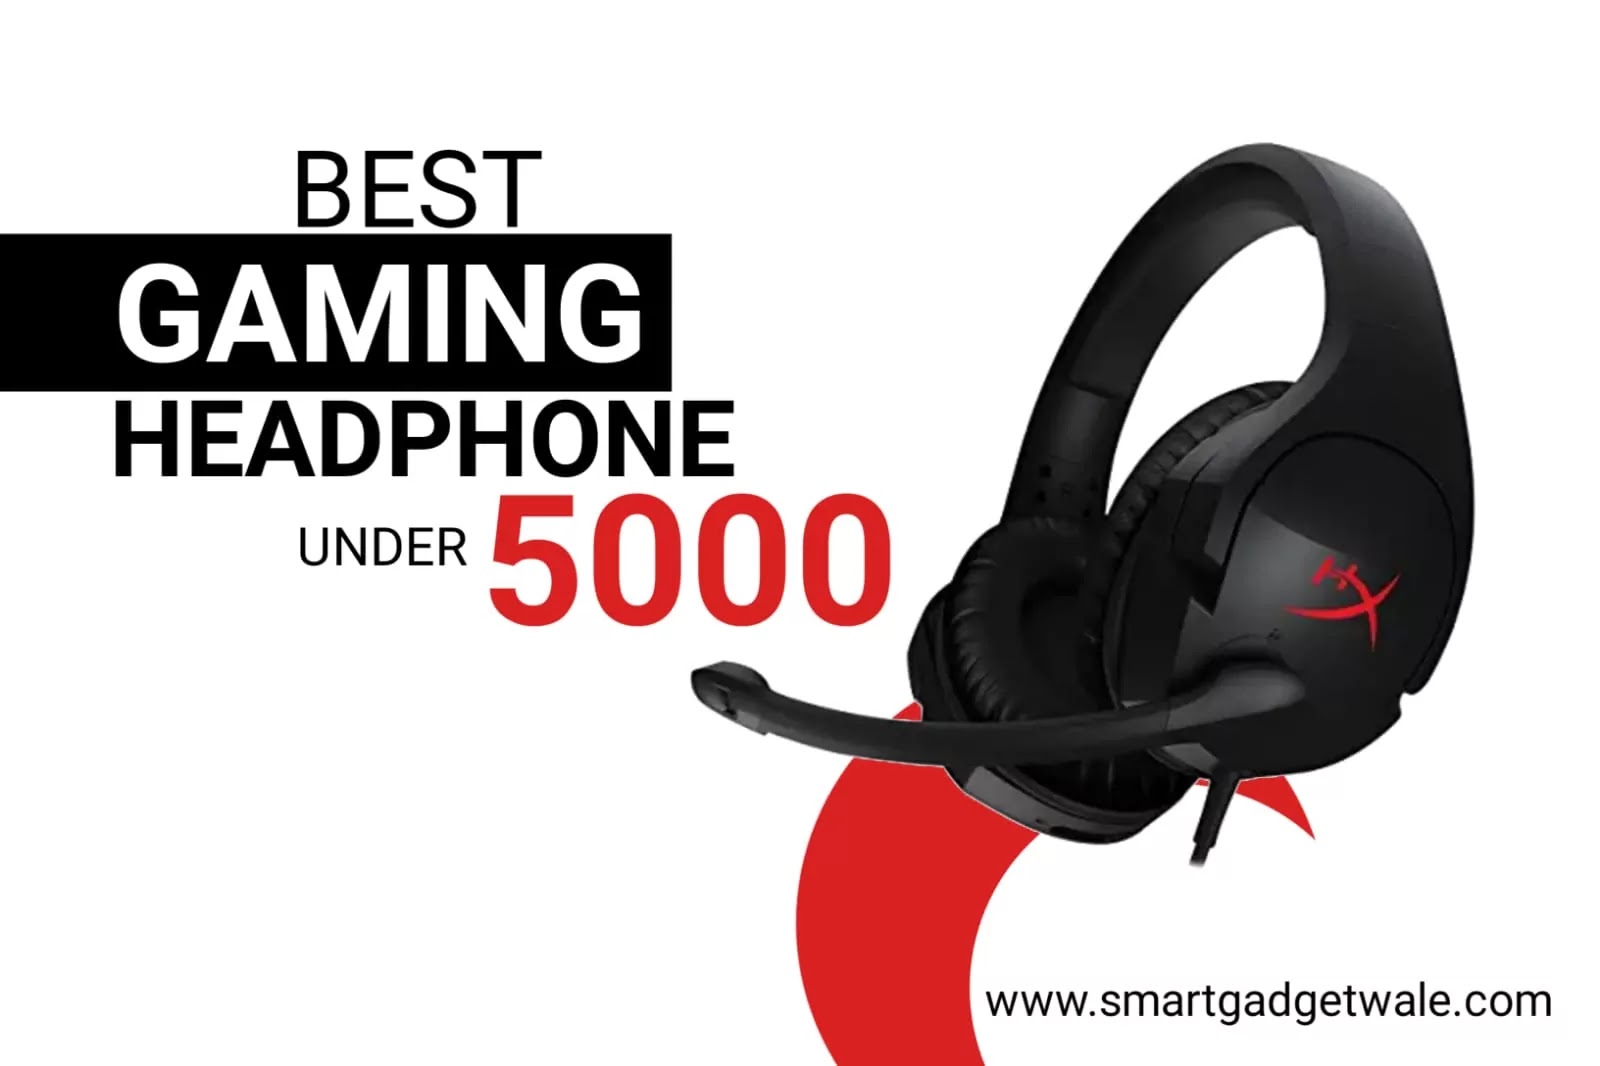 Best Gaming Headphones under 5000 in India